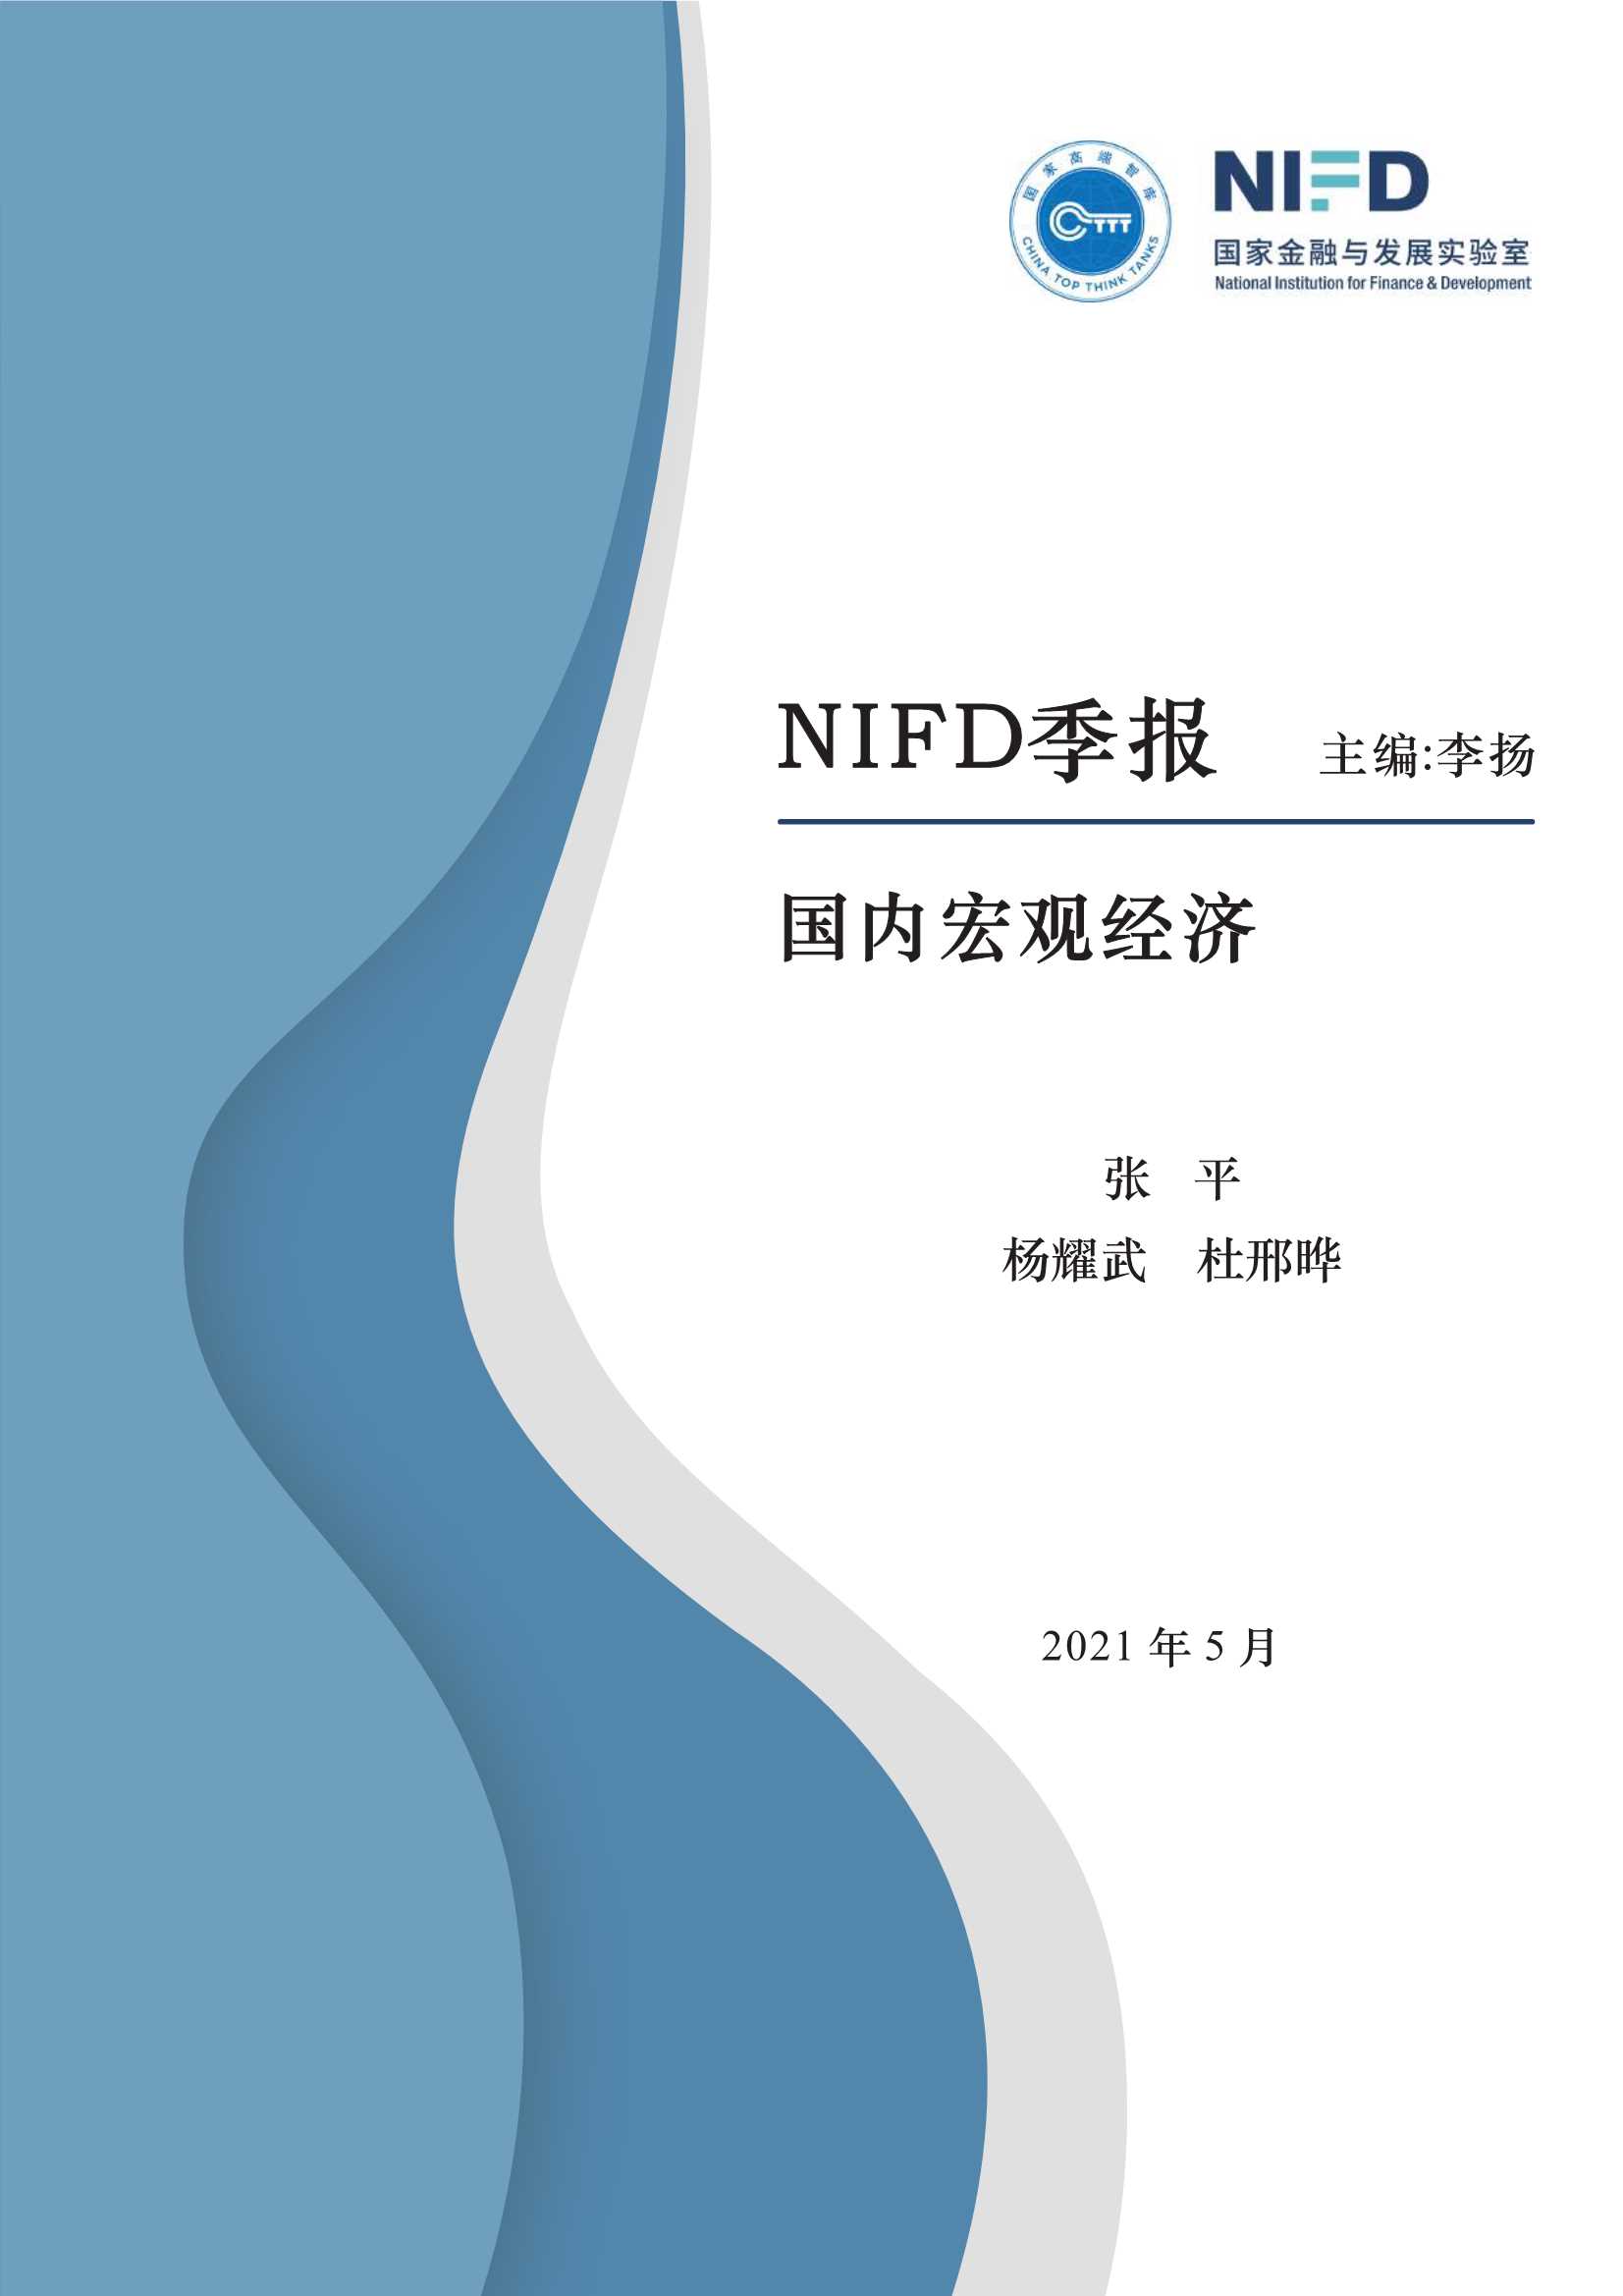 NIFD-2021Q1国内宏观经济-2021.05-18页